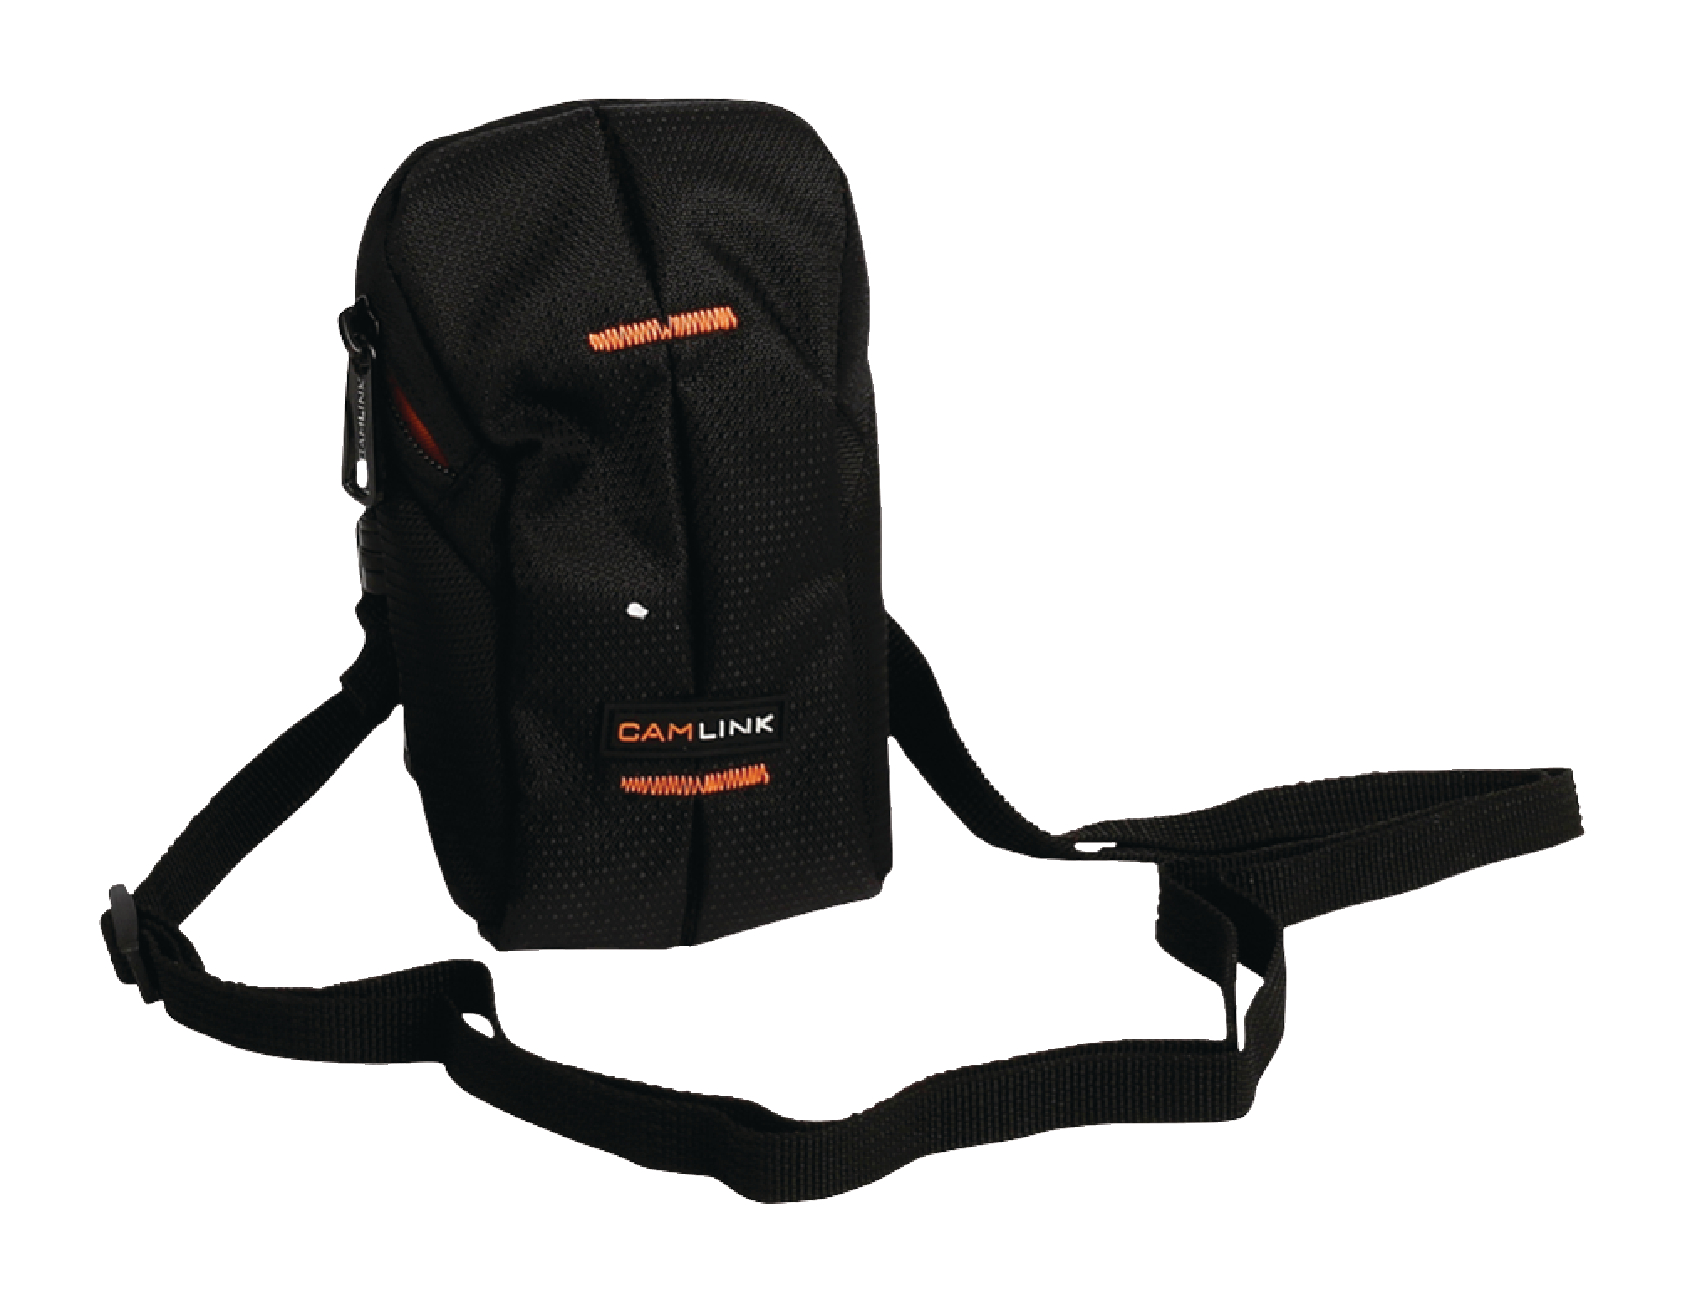 Kamera kompakt taske 70x120x35, sort/orange - Kameratasker -